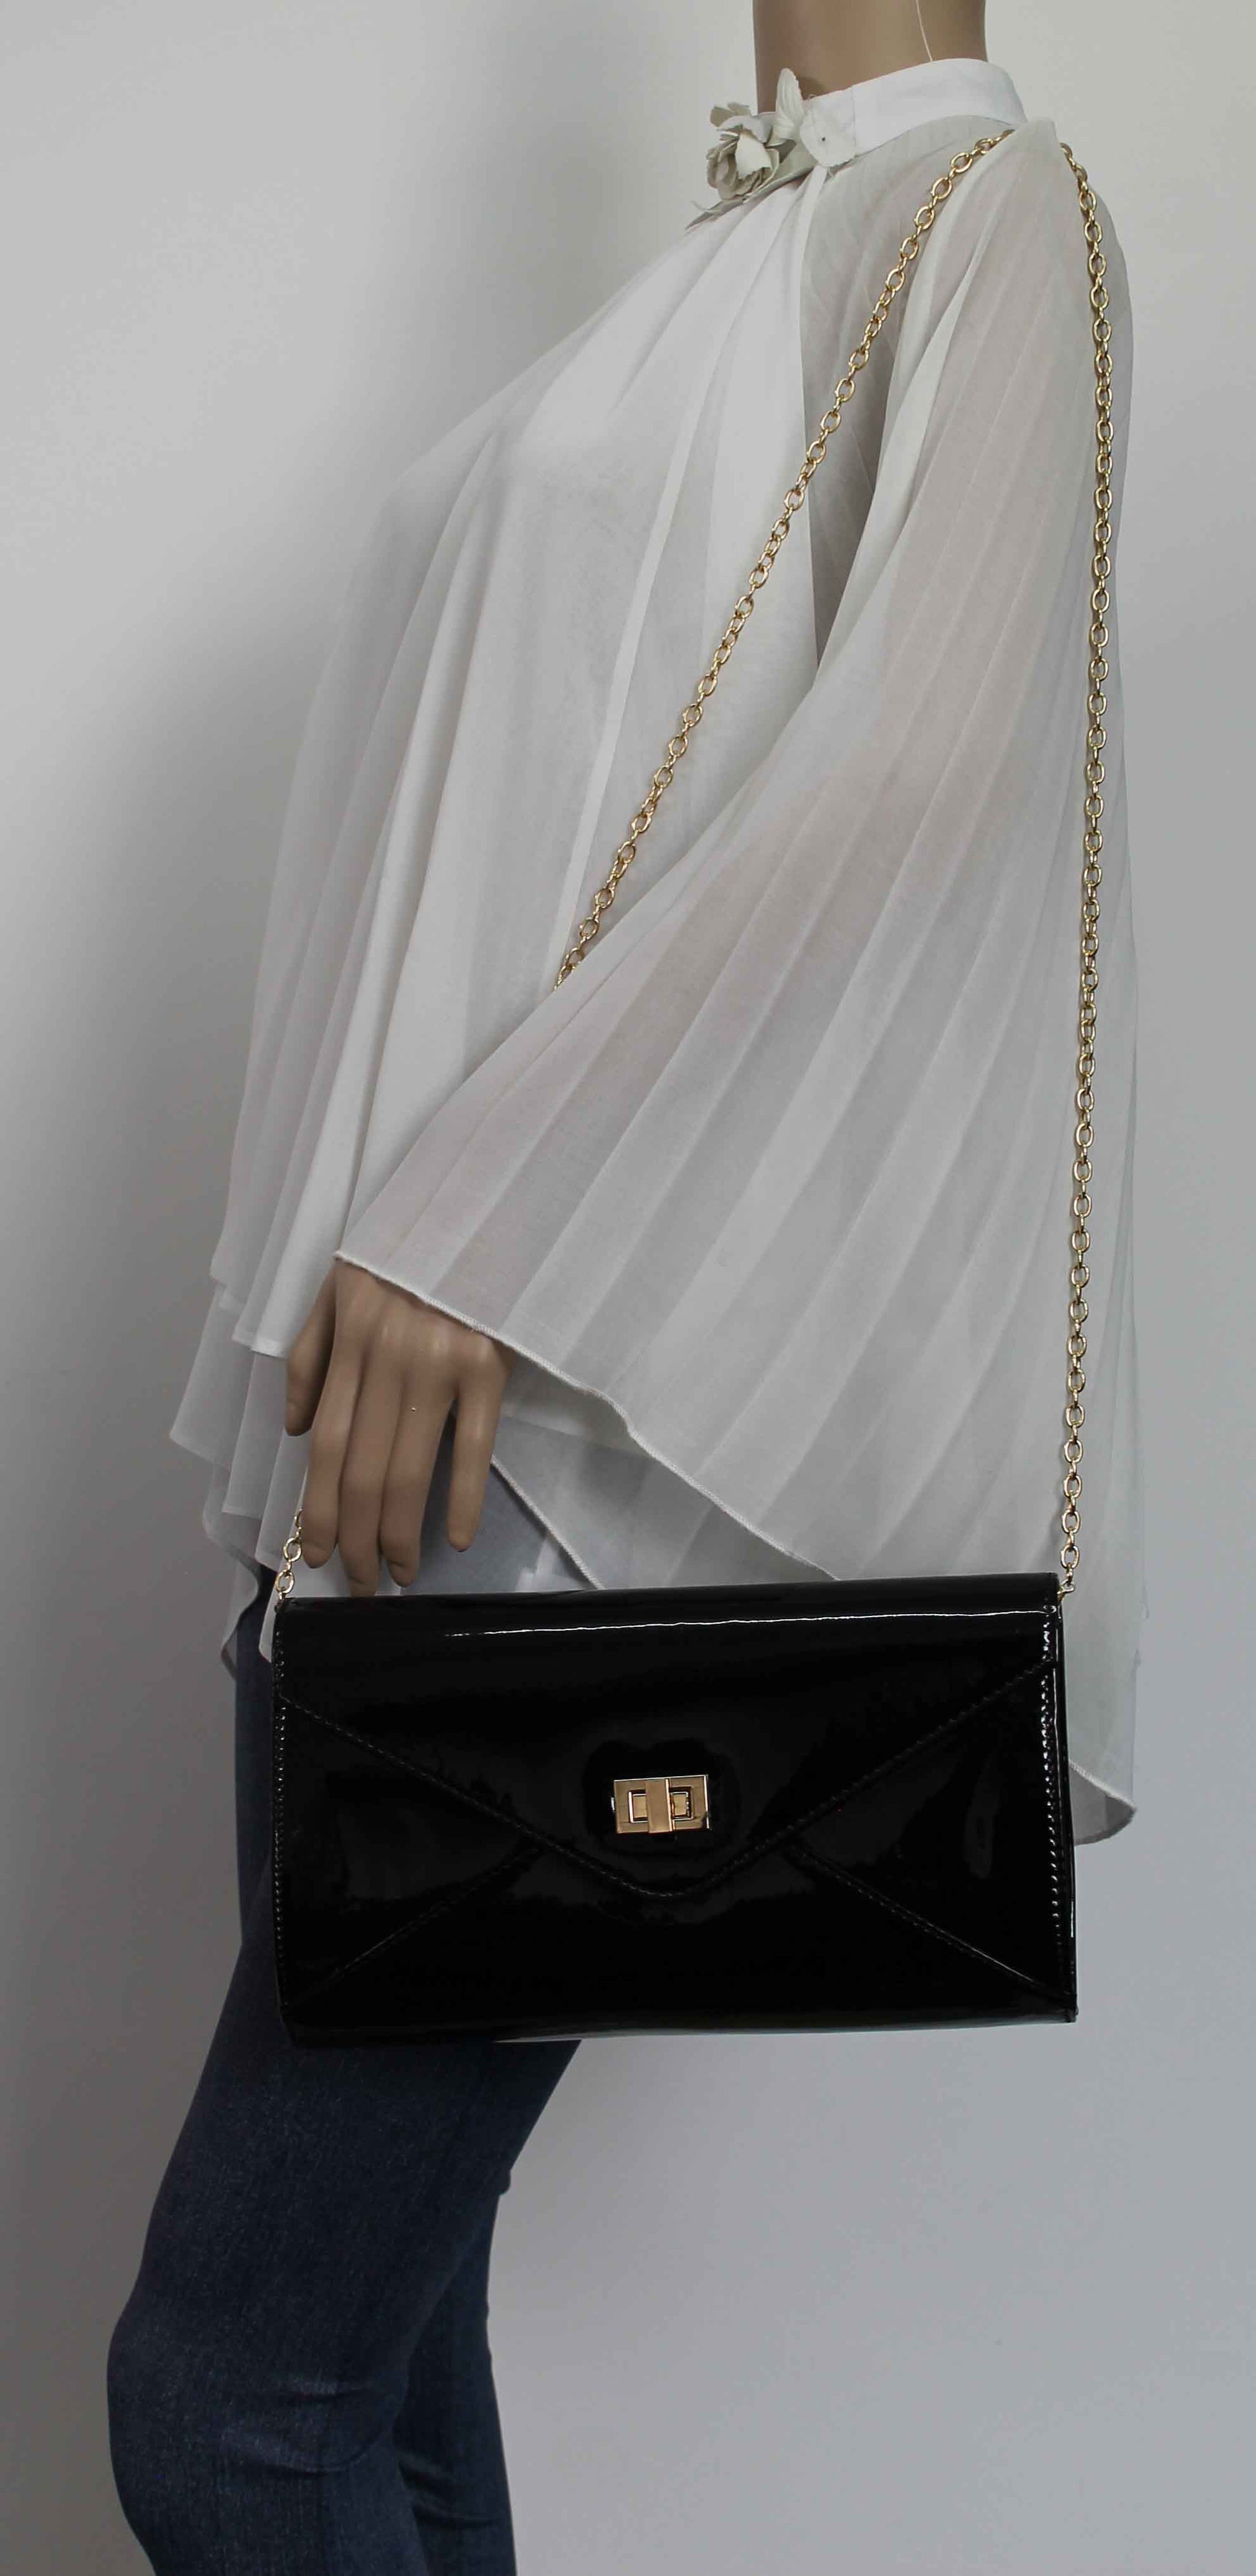 SWANKYSWANS Briana Patent Clutch Bag Black Cute Cheap Clutch Bag For Weddings School and Work